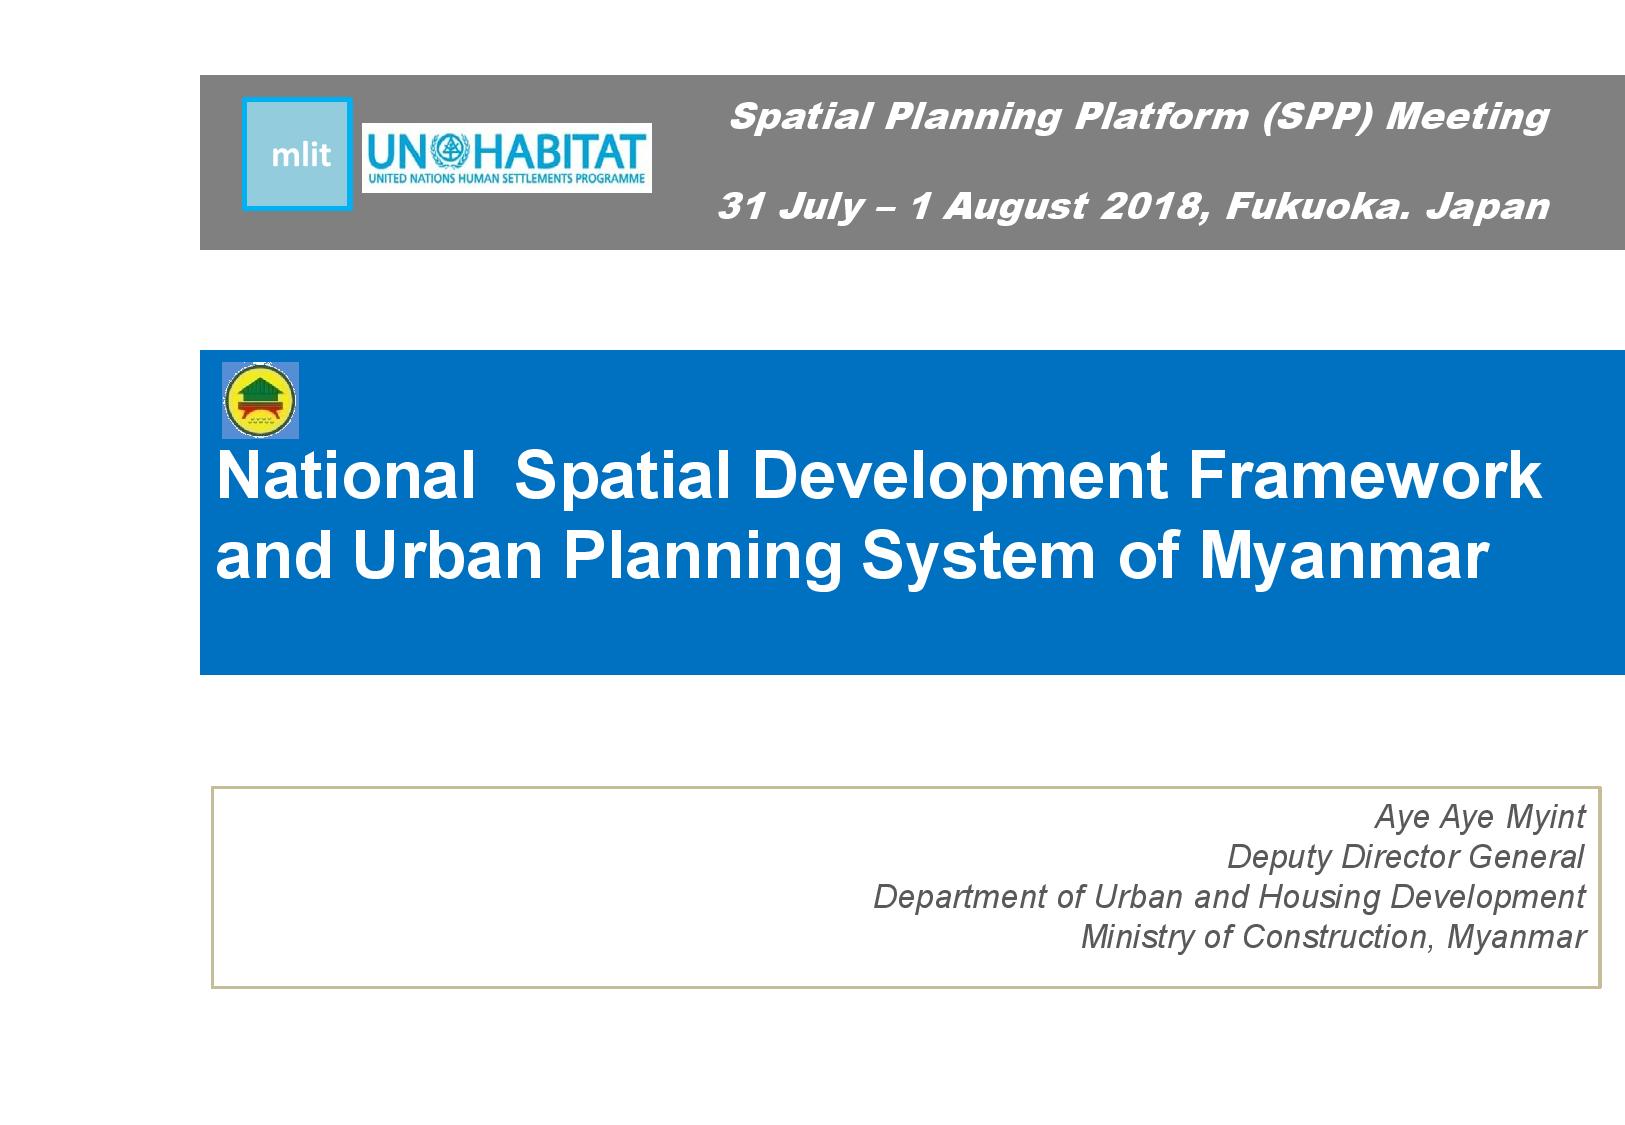 1st Spatial Planning Platform (SPP) Meeting: Part I – National Spatial Development Framework and Urban Planning System of Myanmar